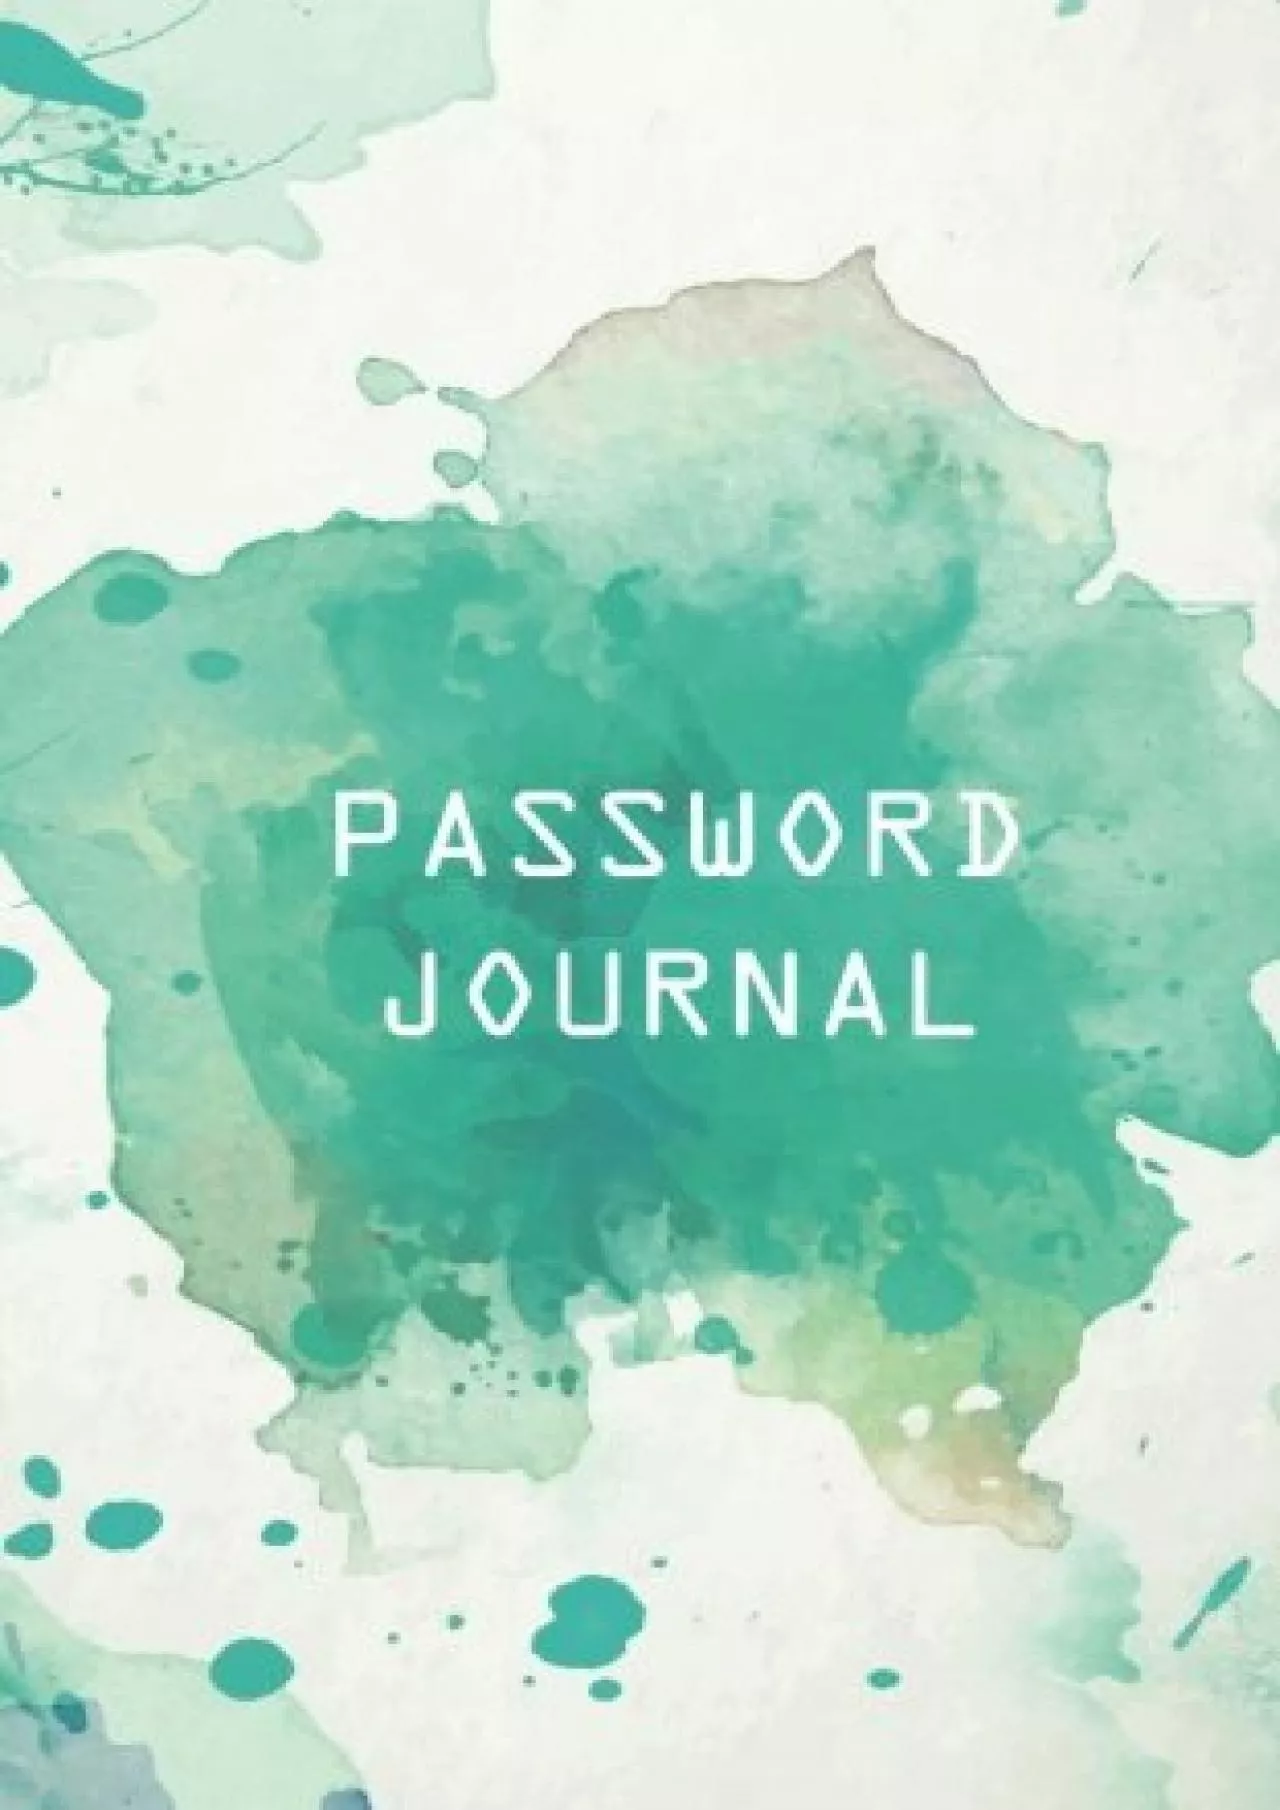 [eBOOK]-Password Journal: Web Password Logbook - (Green Watercolor) - A Password Journal